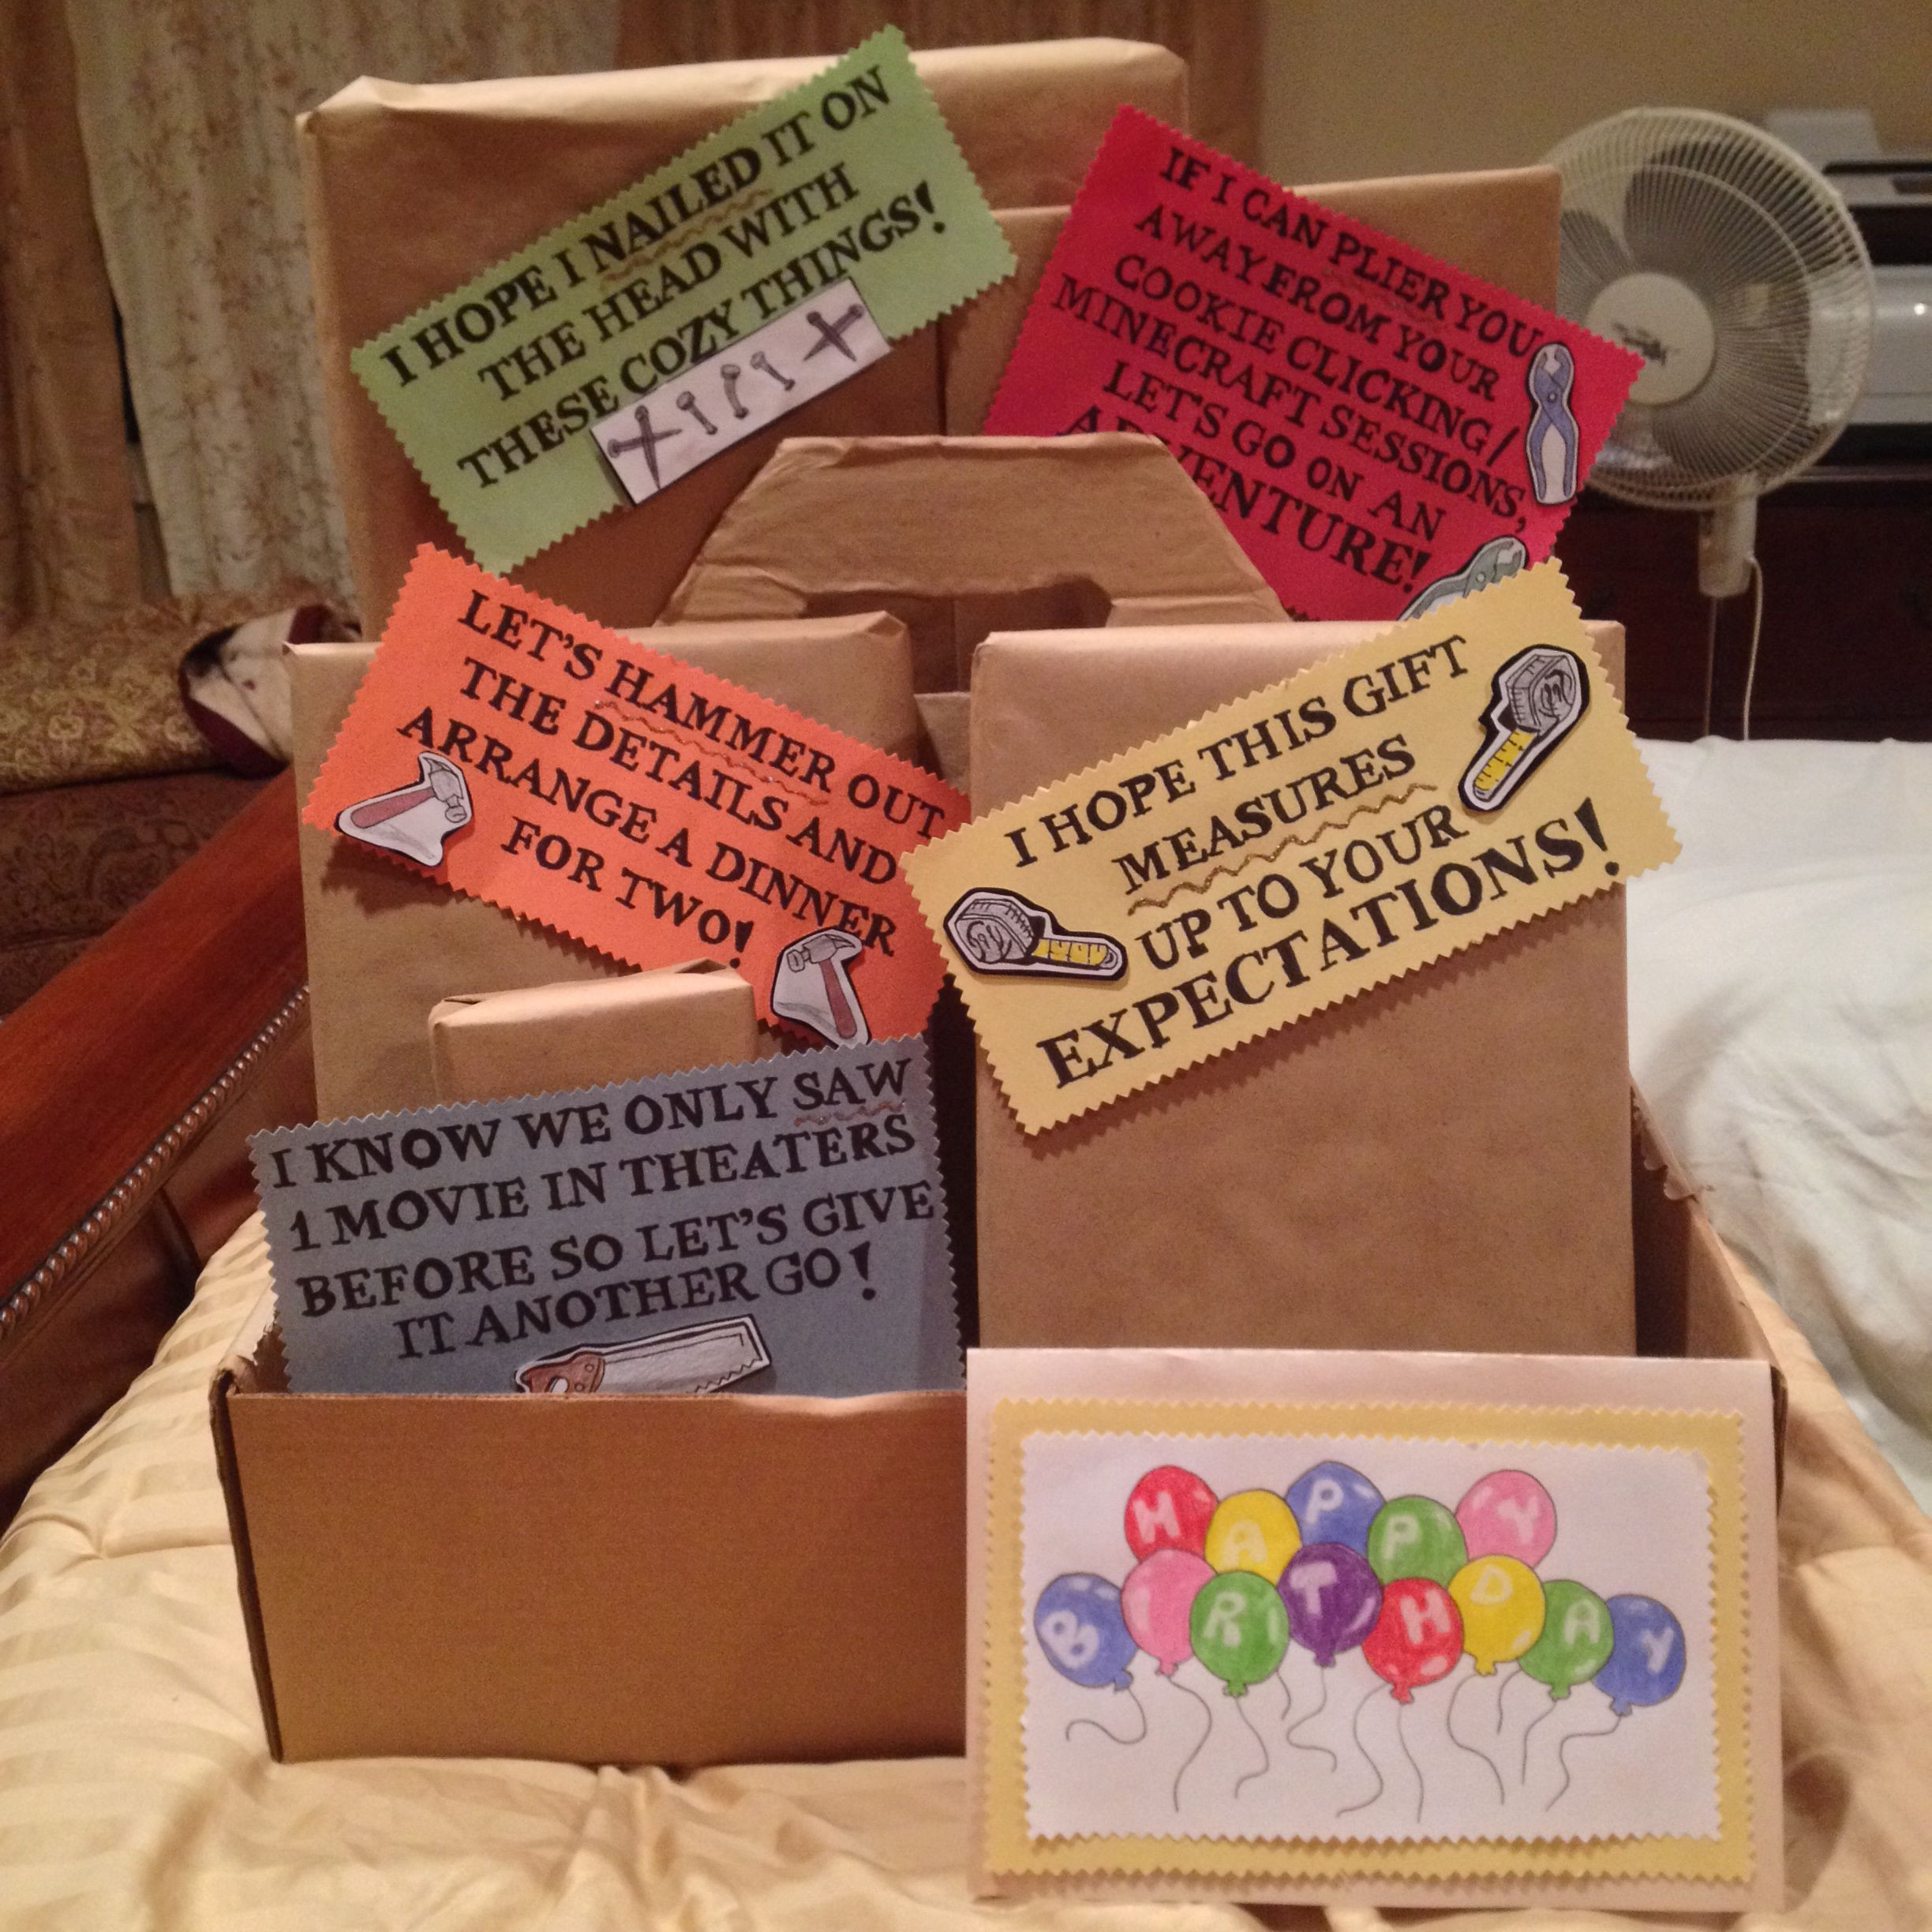 Ideas For A Gift For My Boyfriend
 Boyfriend "toolbox" full of presents Cheesy but cuute